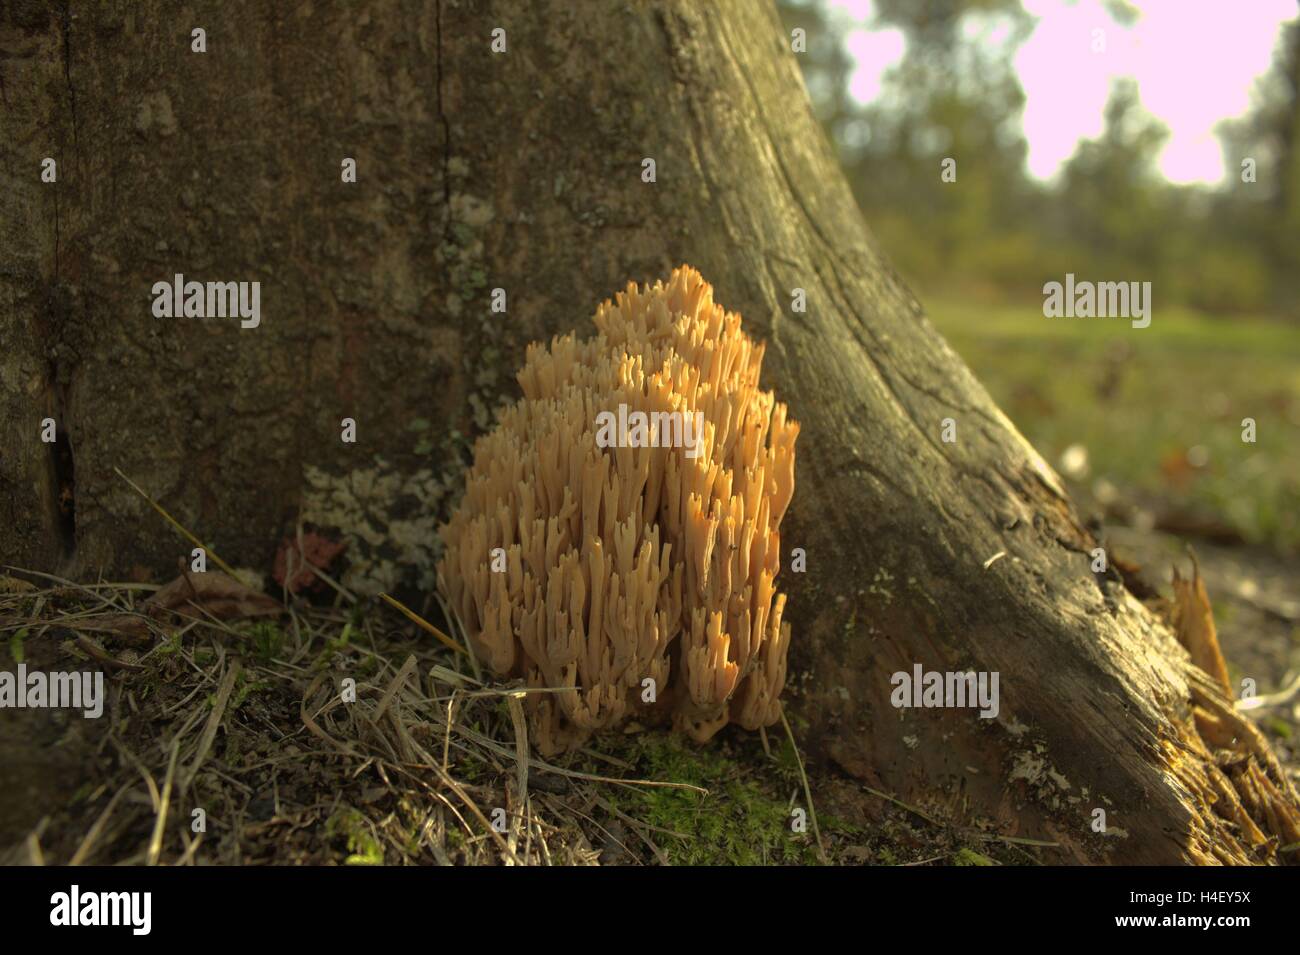 Crown Coral Mushroom Near a Tree Stump Stock Photo